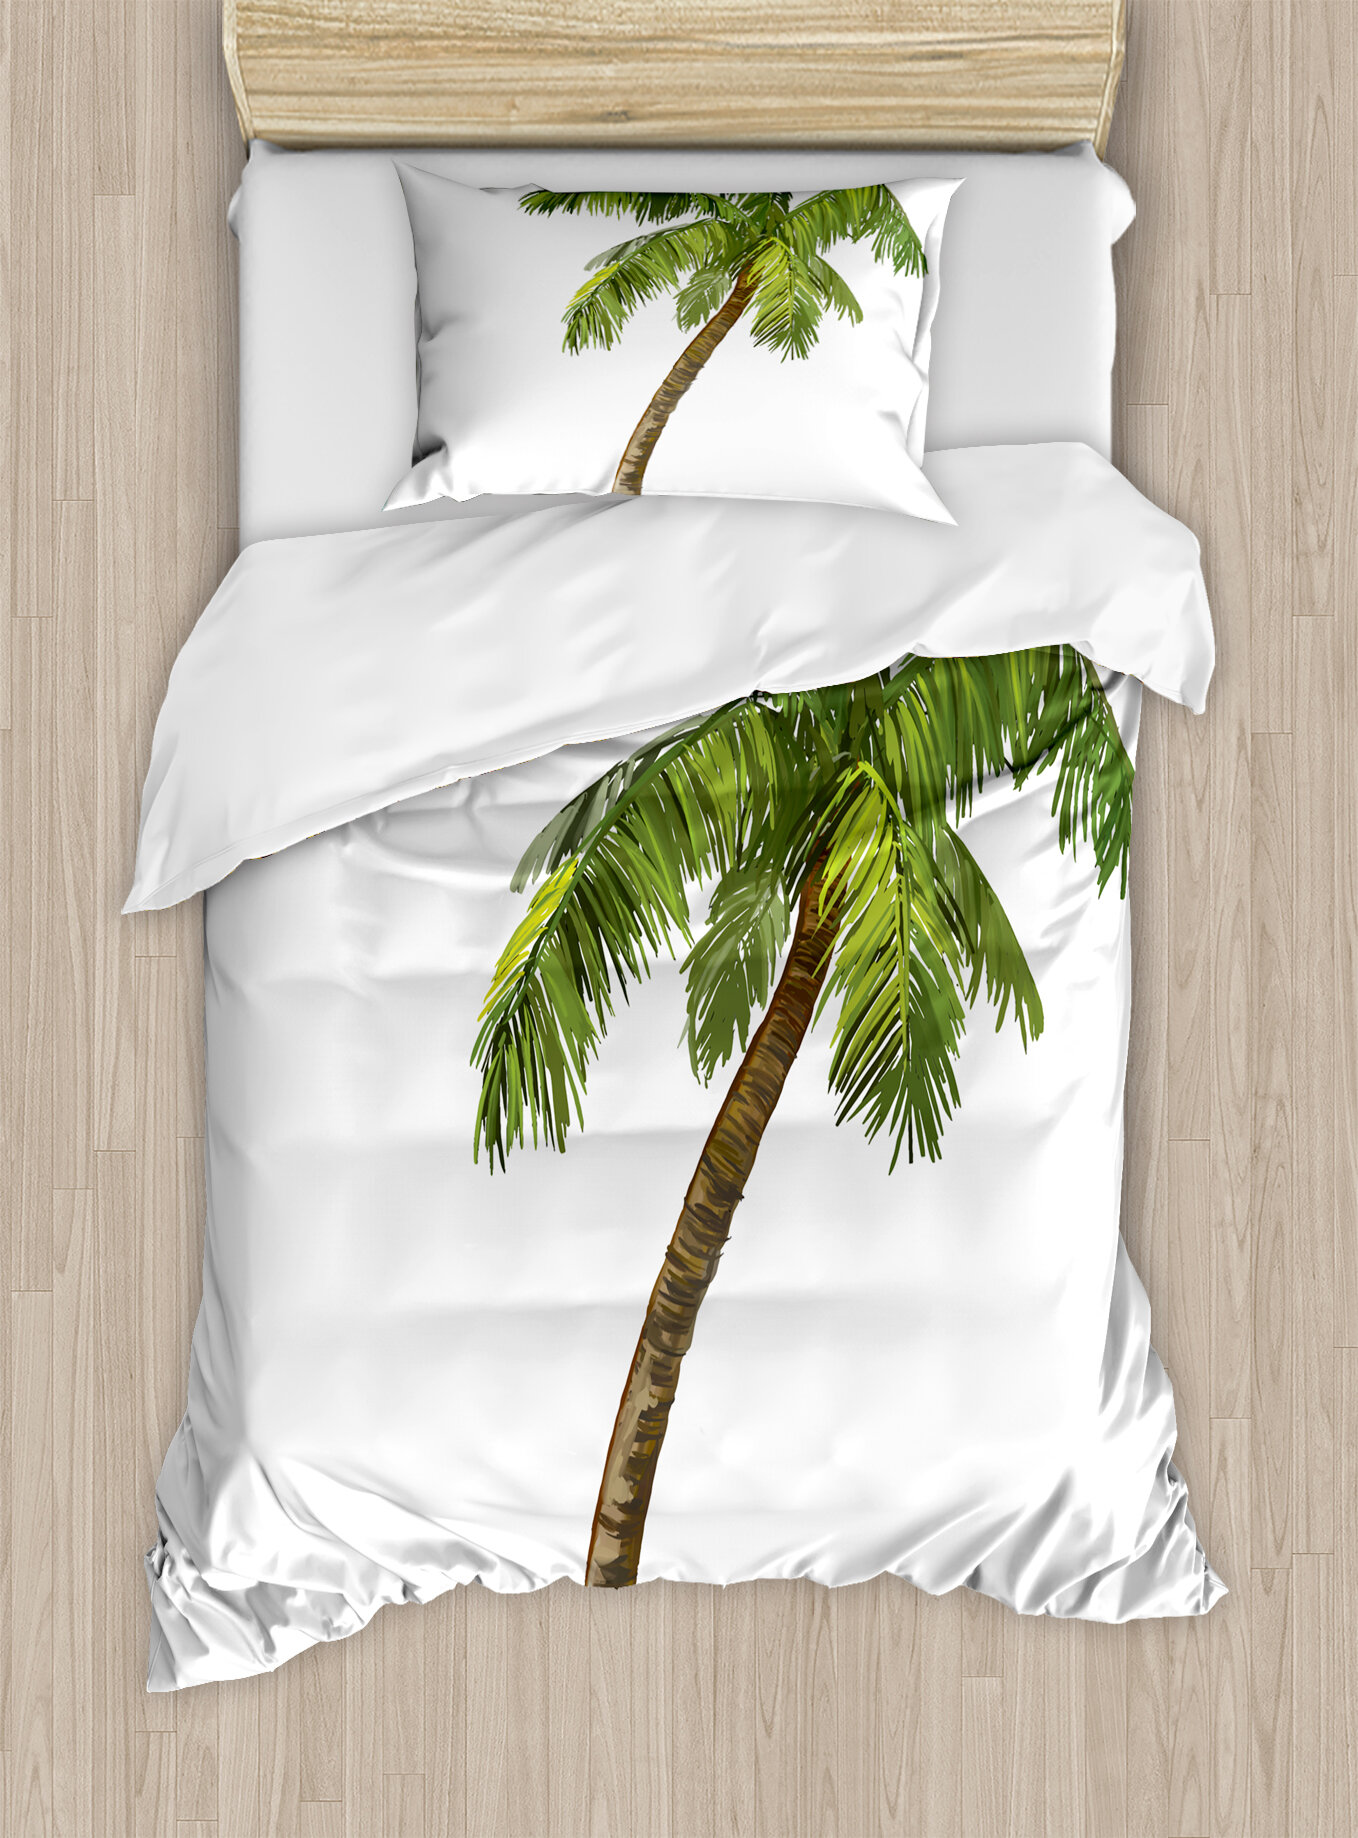 East Urban Home Palm Tree Cartoon Palms Image Tropical Plant And